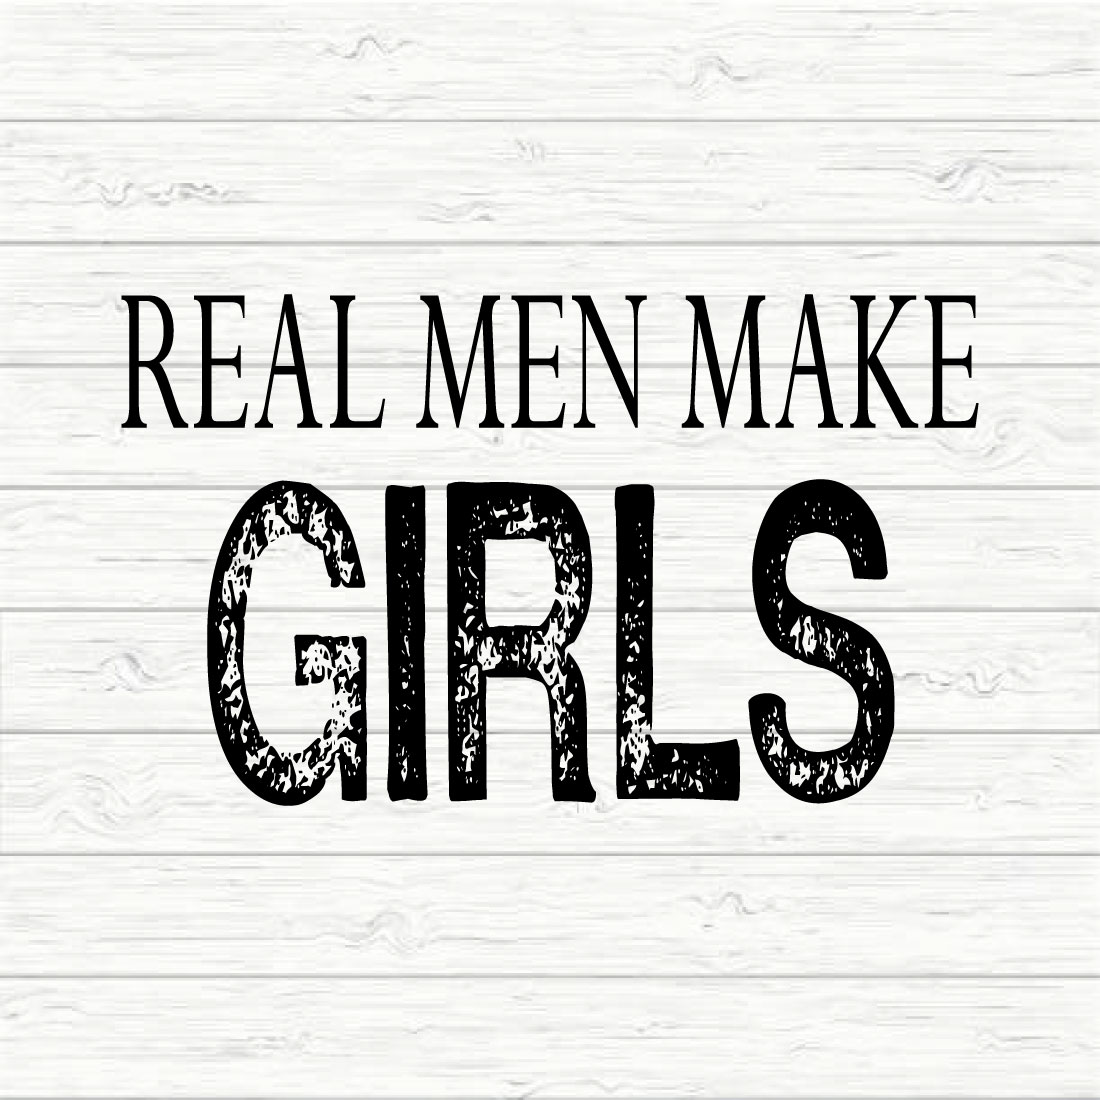 Real Men Make Girls preview image.